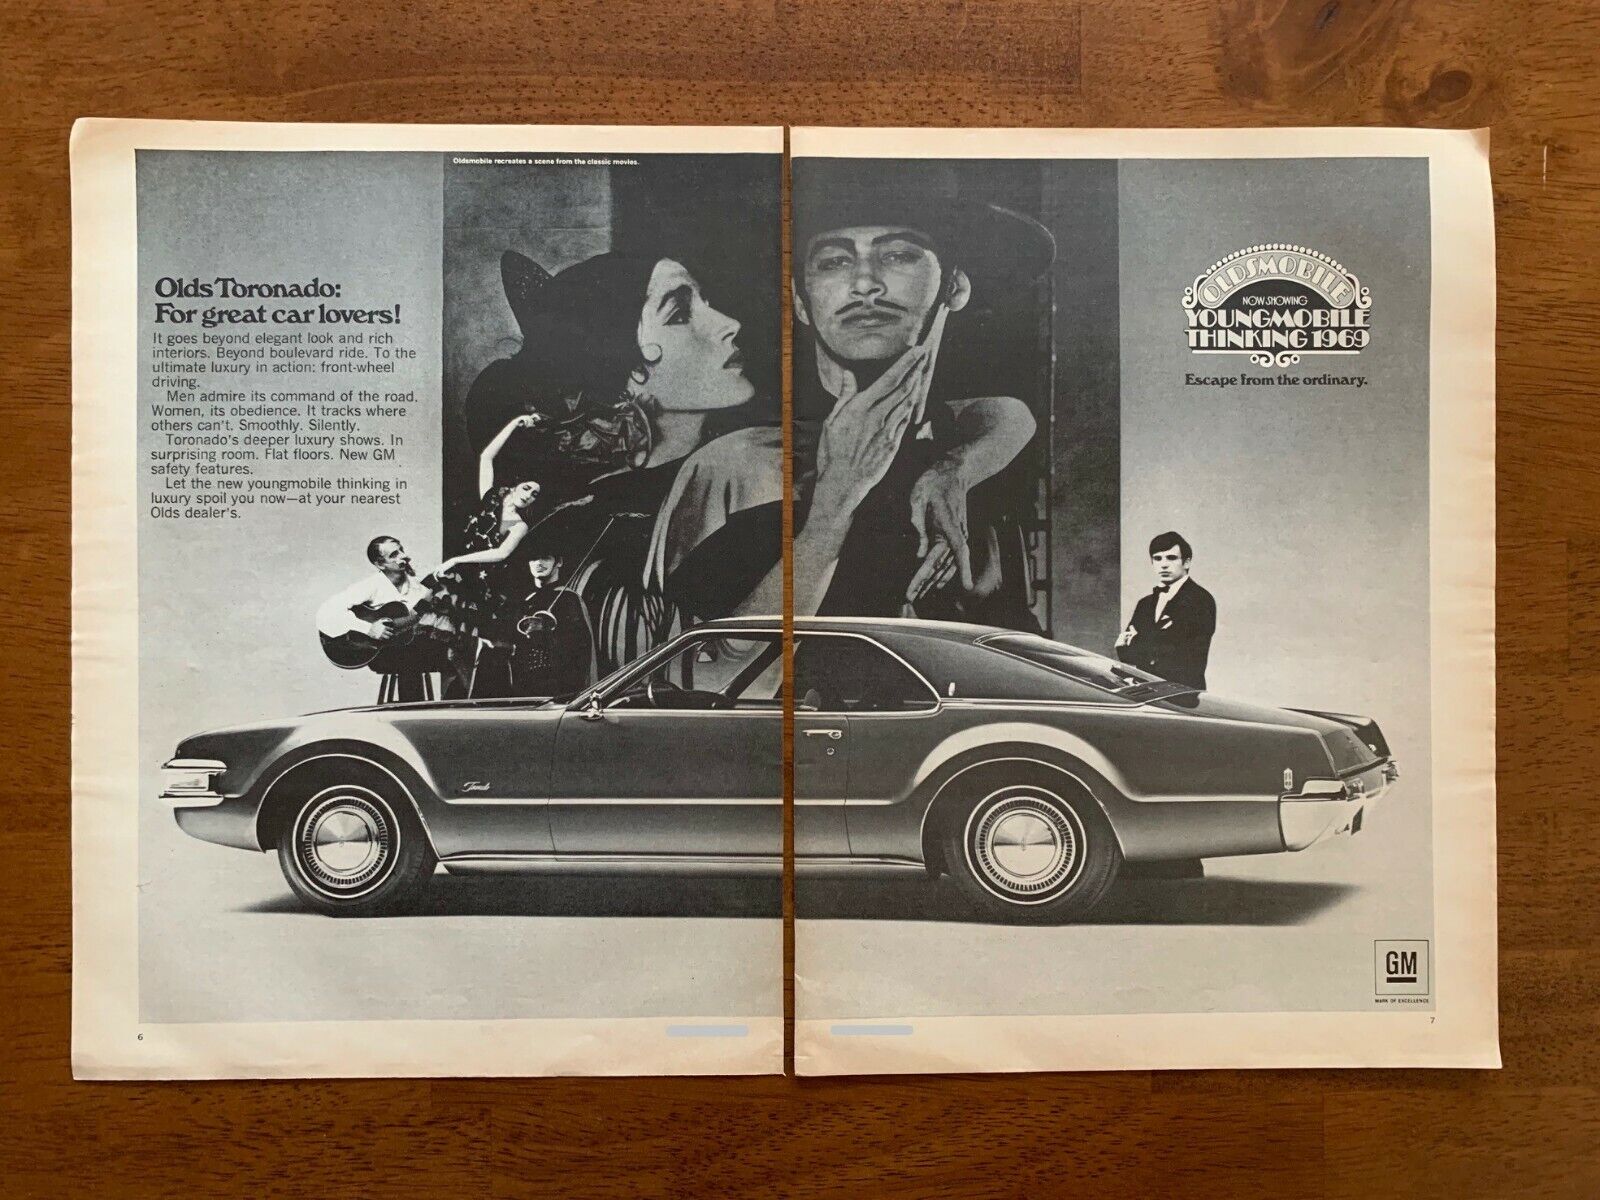 1964 Oldsmobile Toronado Vintage Car Print Ad/Poster Zorro Man Cave Bar Décor 